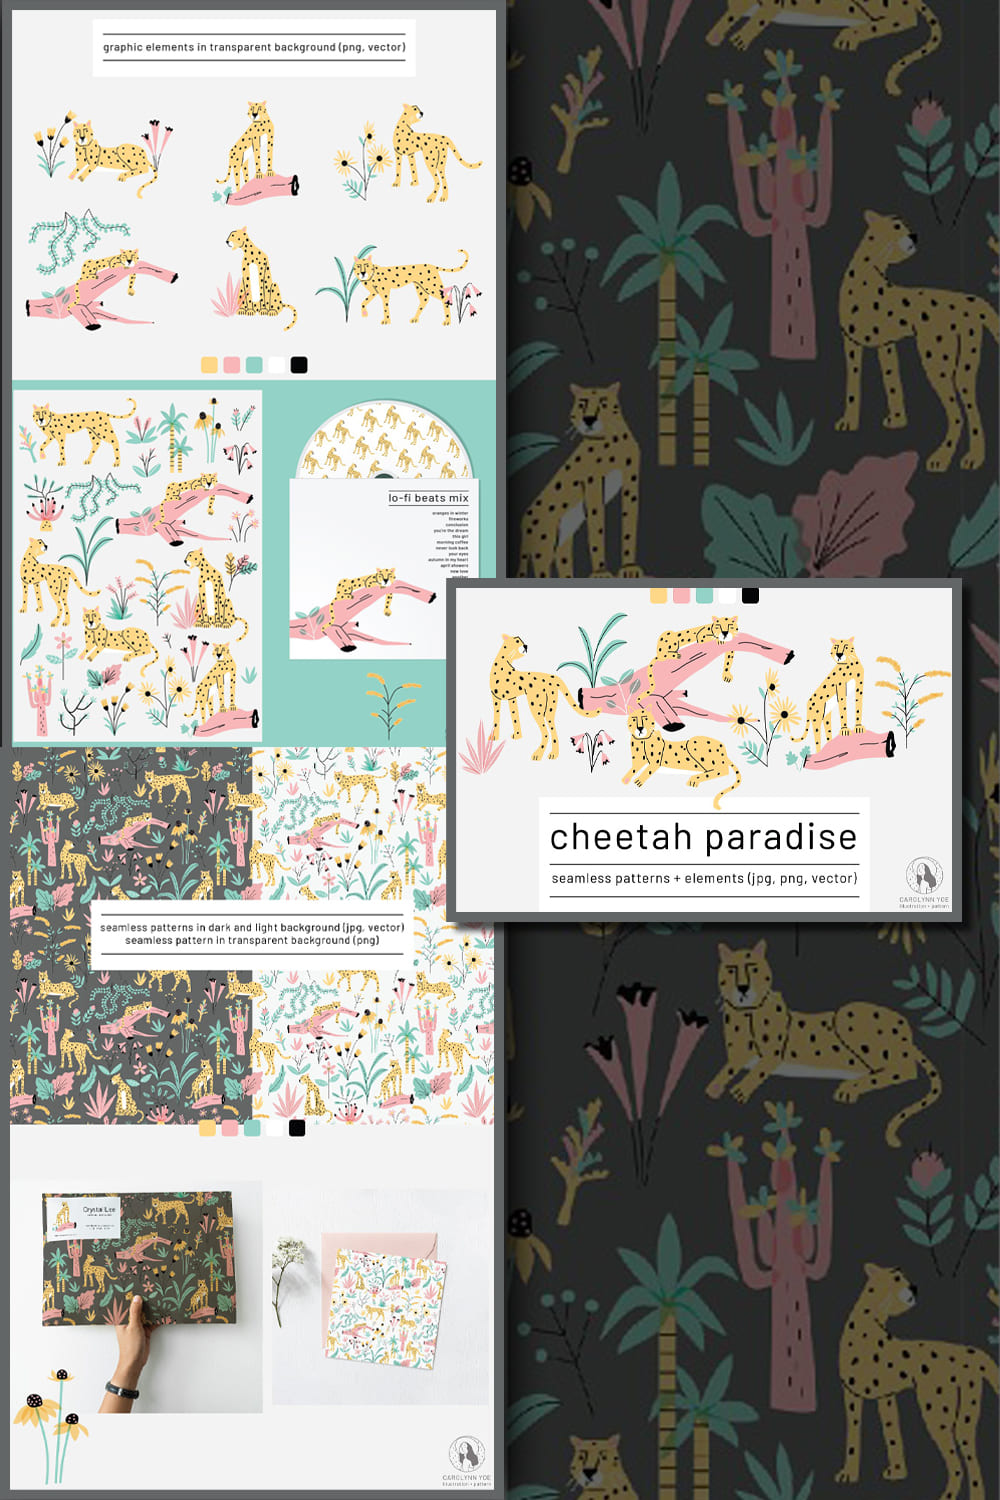 3469571 cheetah paradise collection pinterest 1000 1500 432